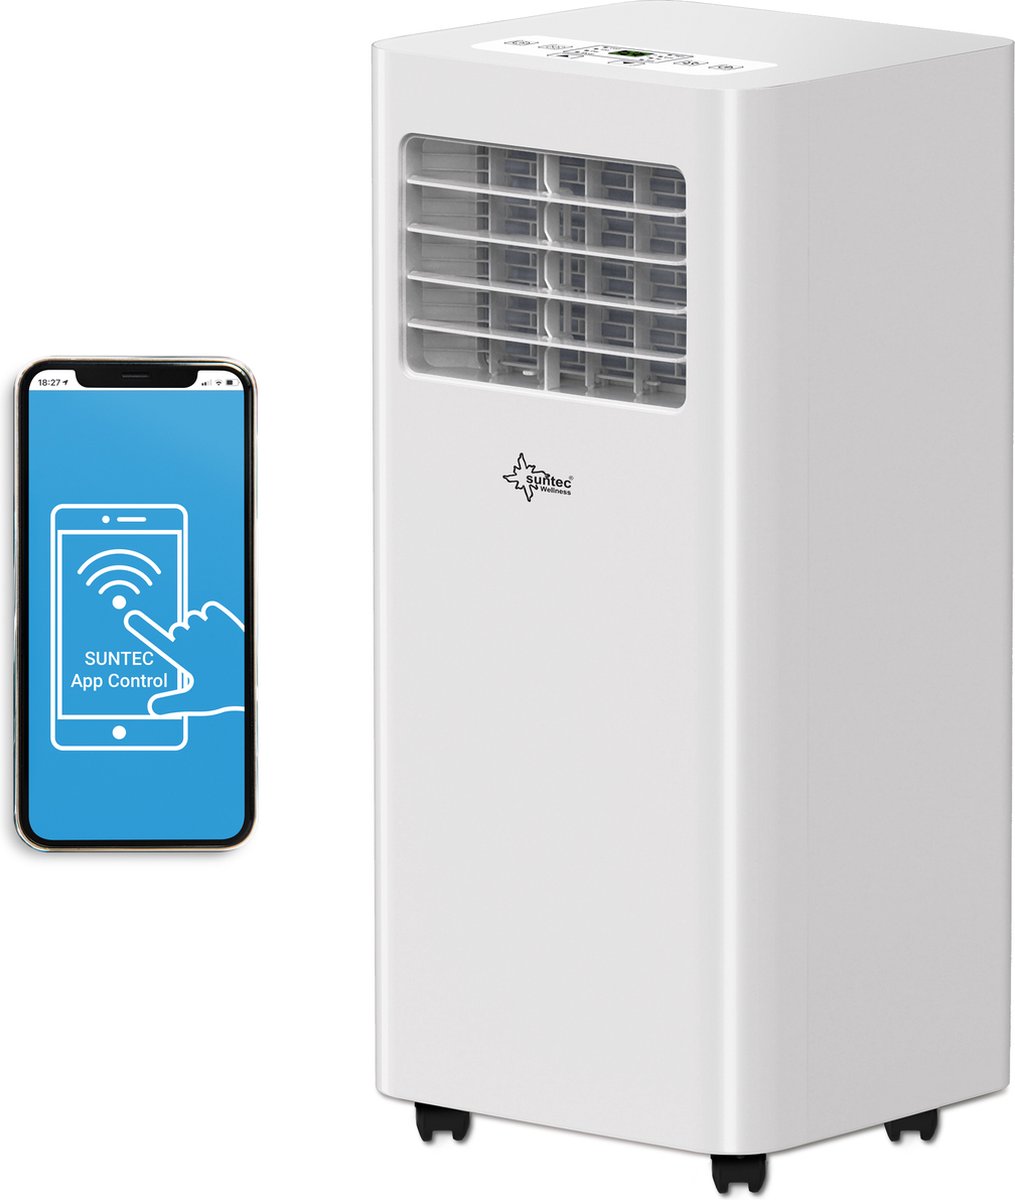 SUNTEC mobiele airco App - 7.000 BTU / 2050 W - air conditioner portable met Smart Home & WiFi - mobile airconditioning voor tot 25m² - 3 in 1 functie